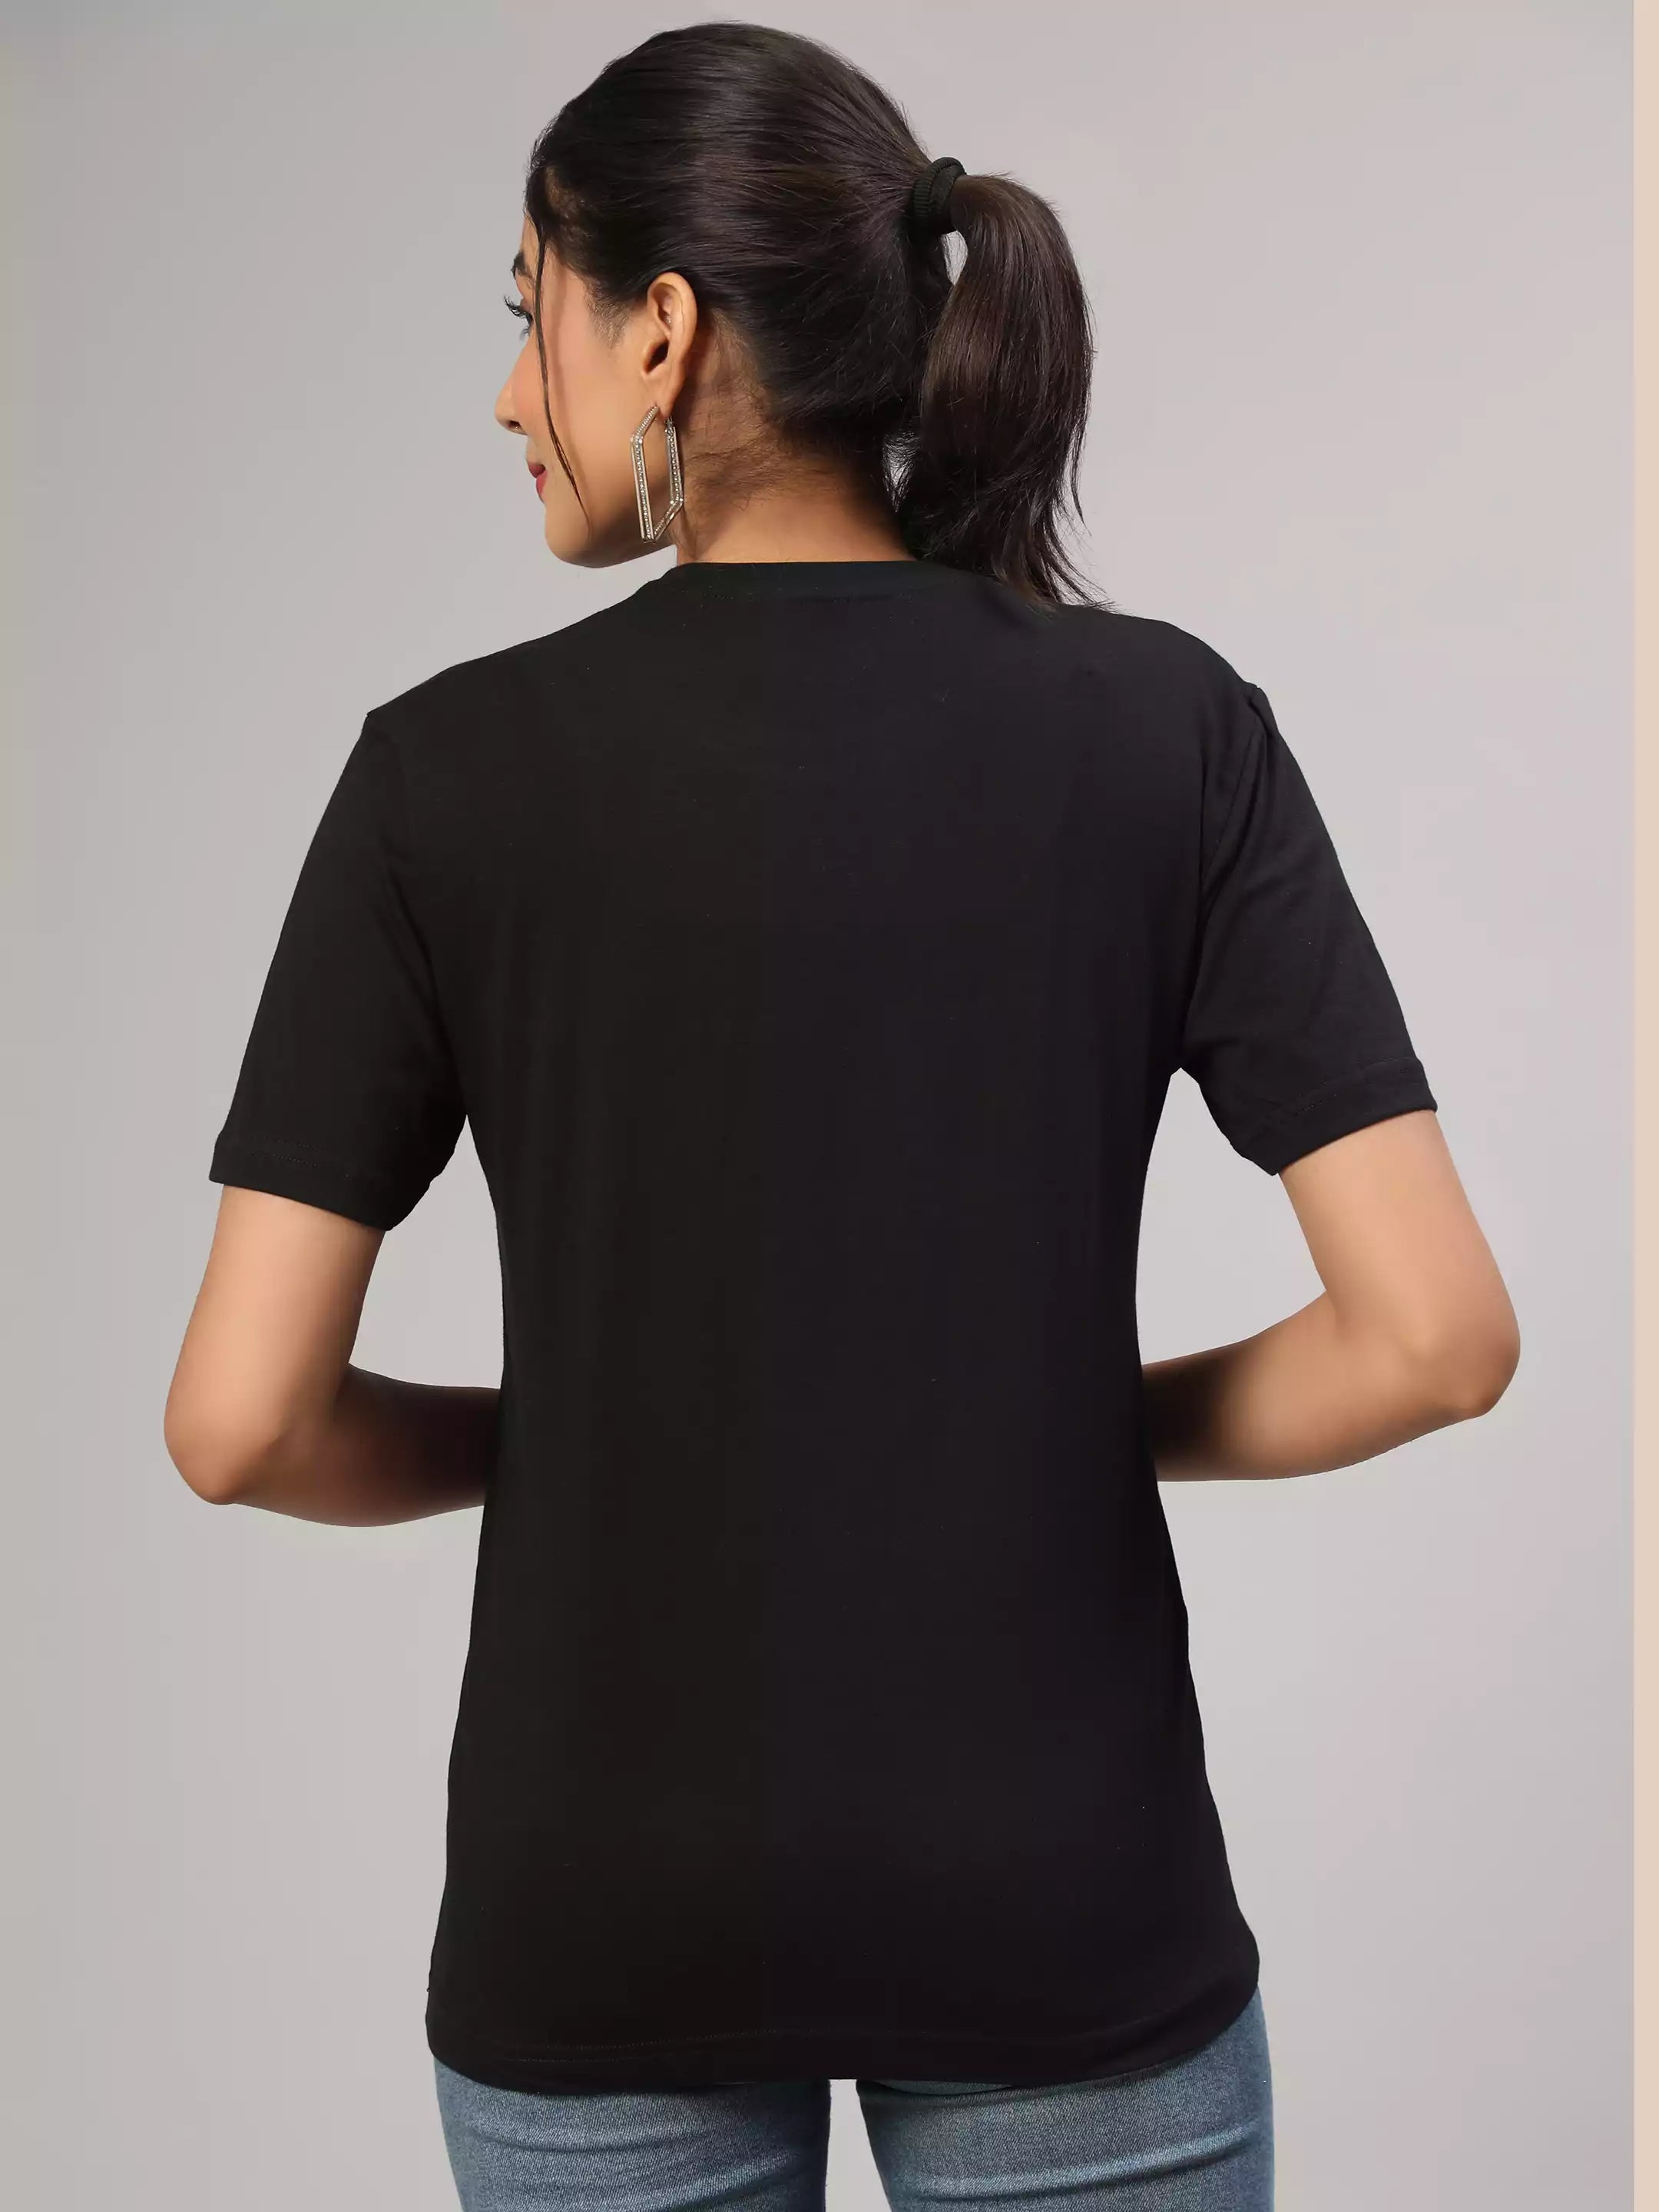 Misal - Sukhiaatma Unisex Graphic Printed  Black T-shirt